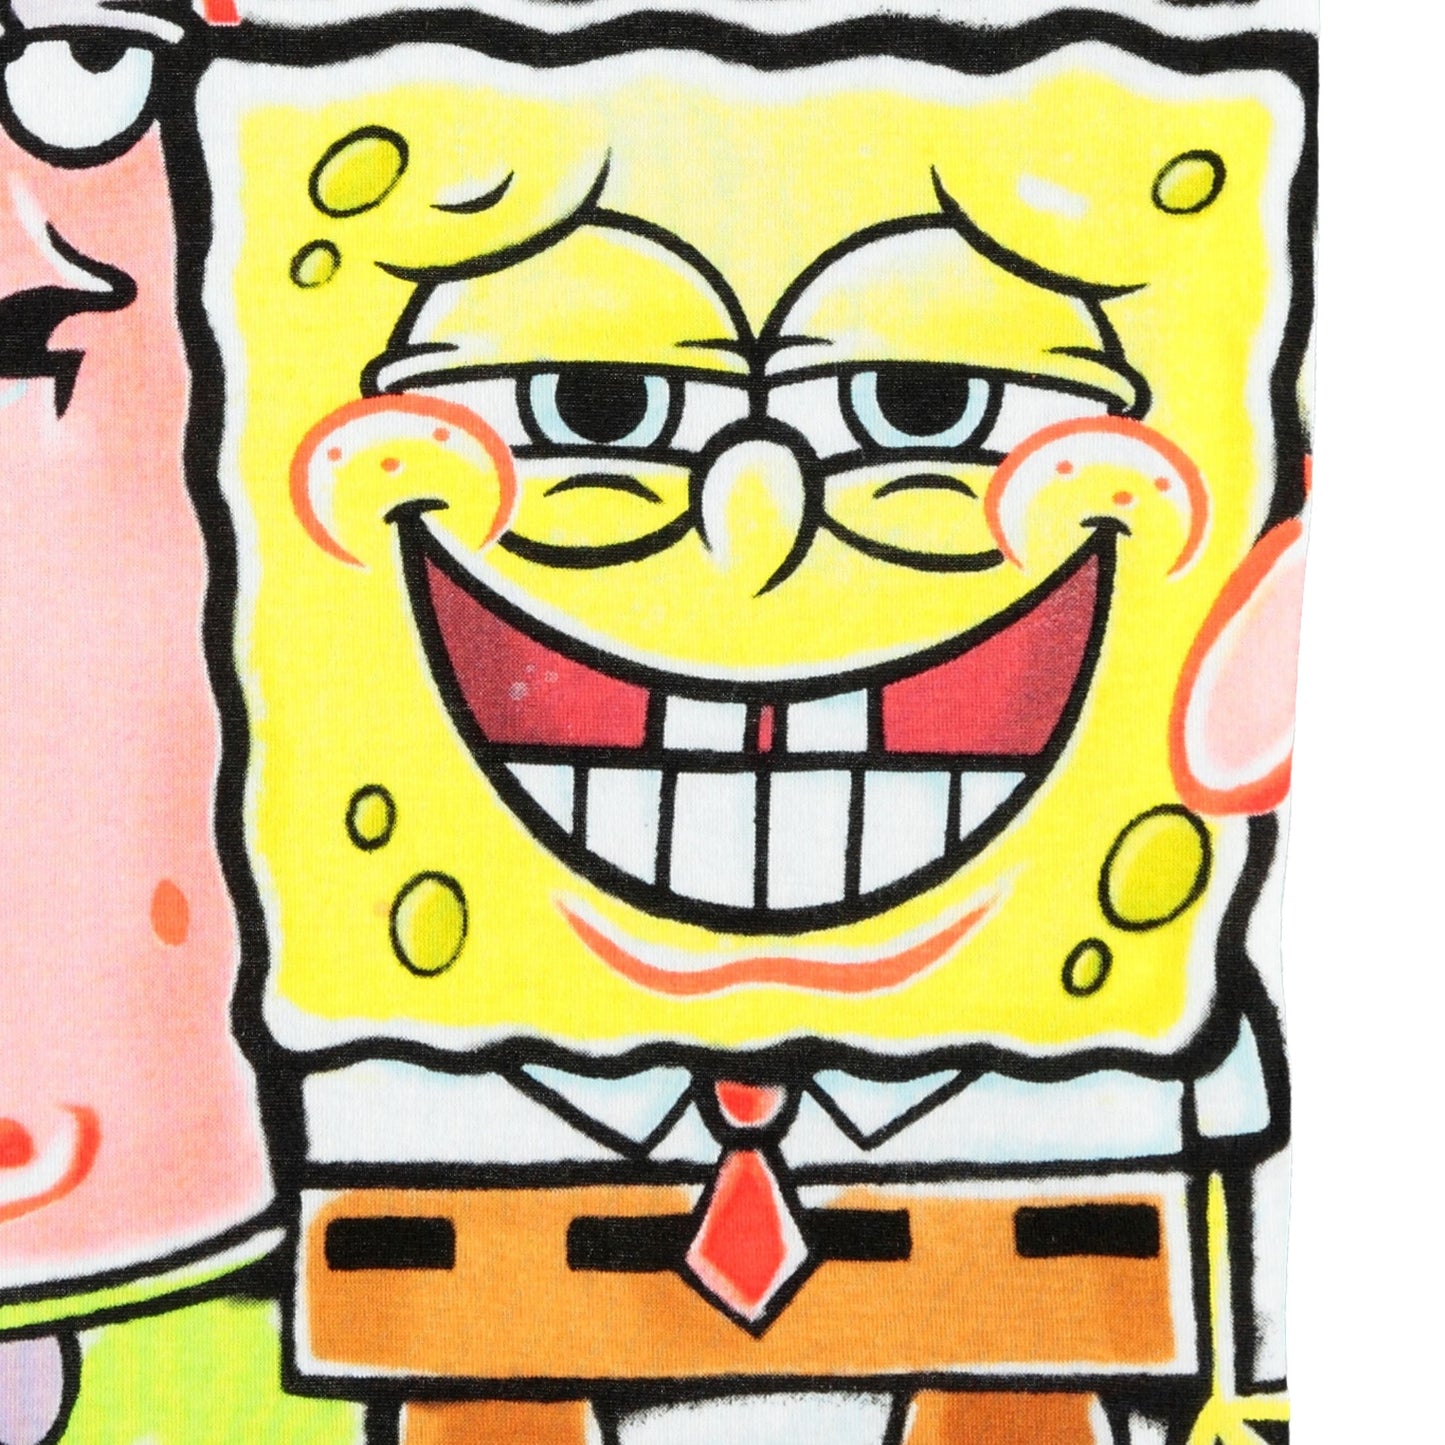 SpongeBob SquarePants Boys Short Sleeve T-Shirt - Spongebob, Patrick, Squidward, Mr Krabs - Nickelodeon - Boys Sizes 4-20